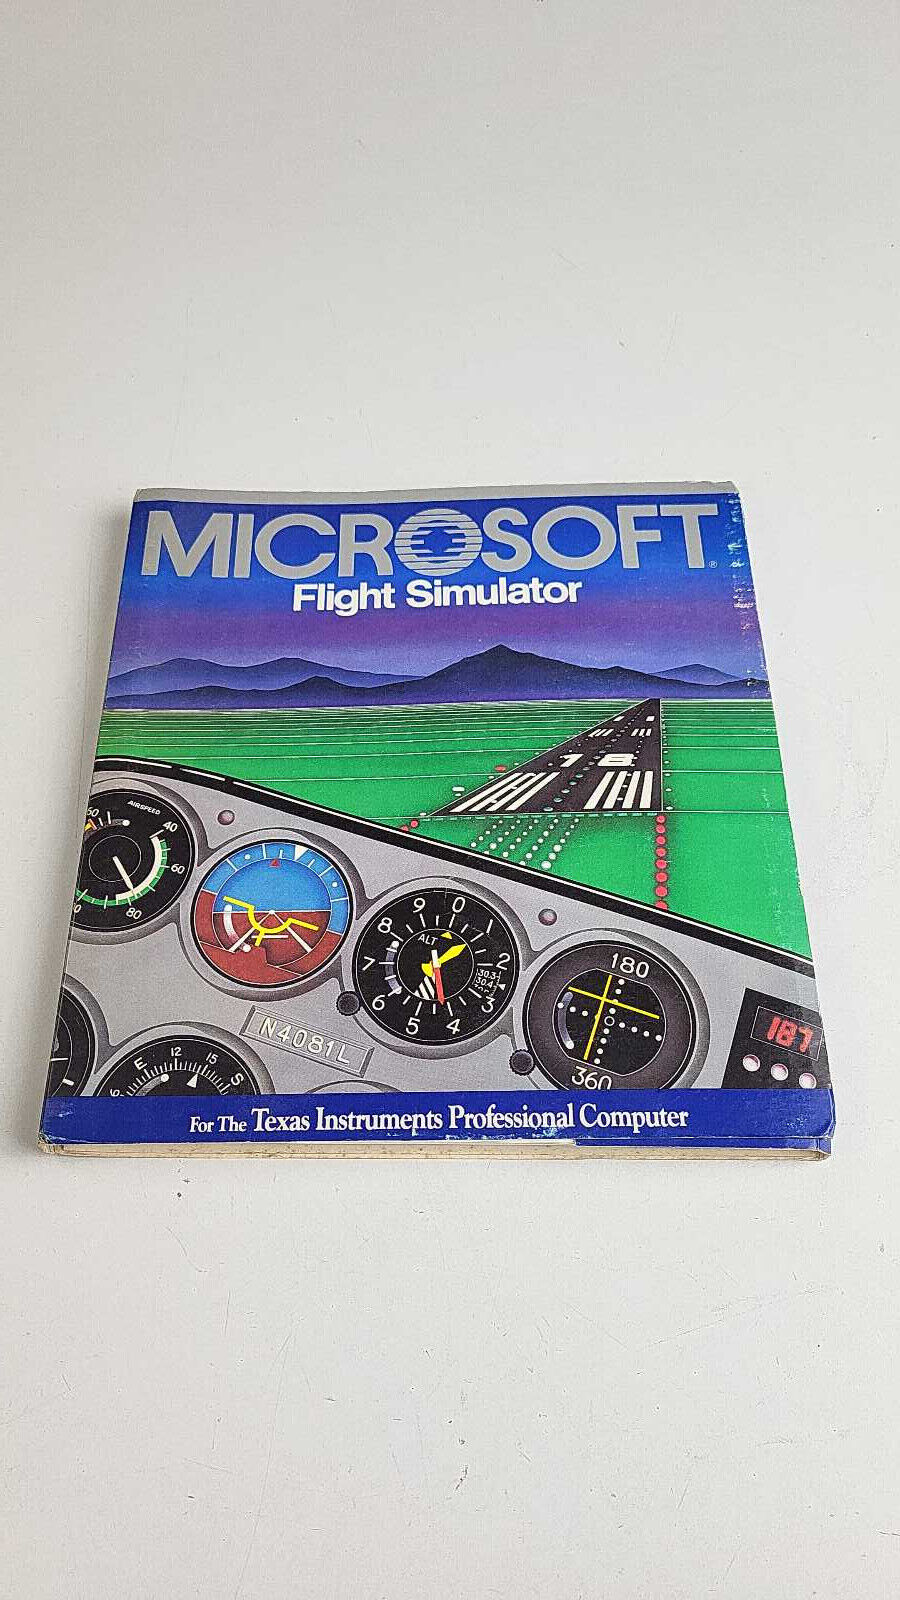 Microsoft Flight Simulator for the Texas Instruments Professional Computer